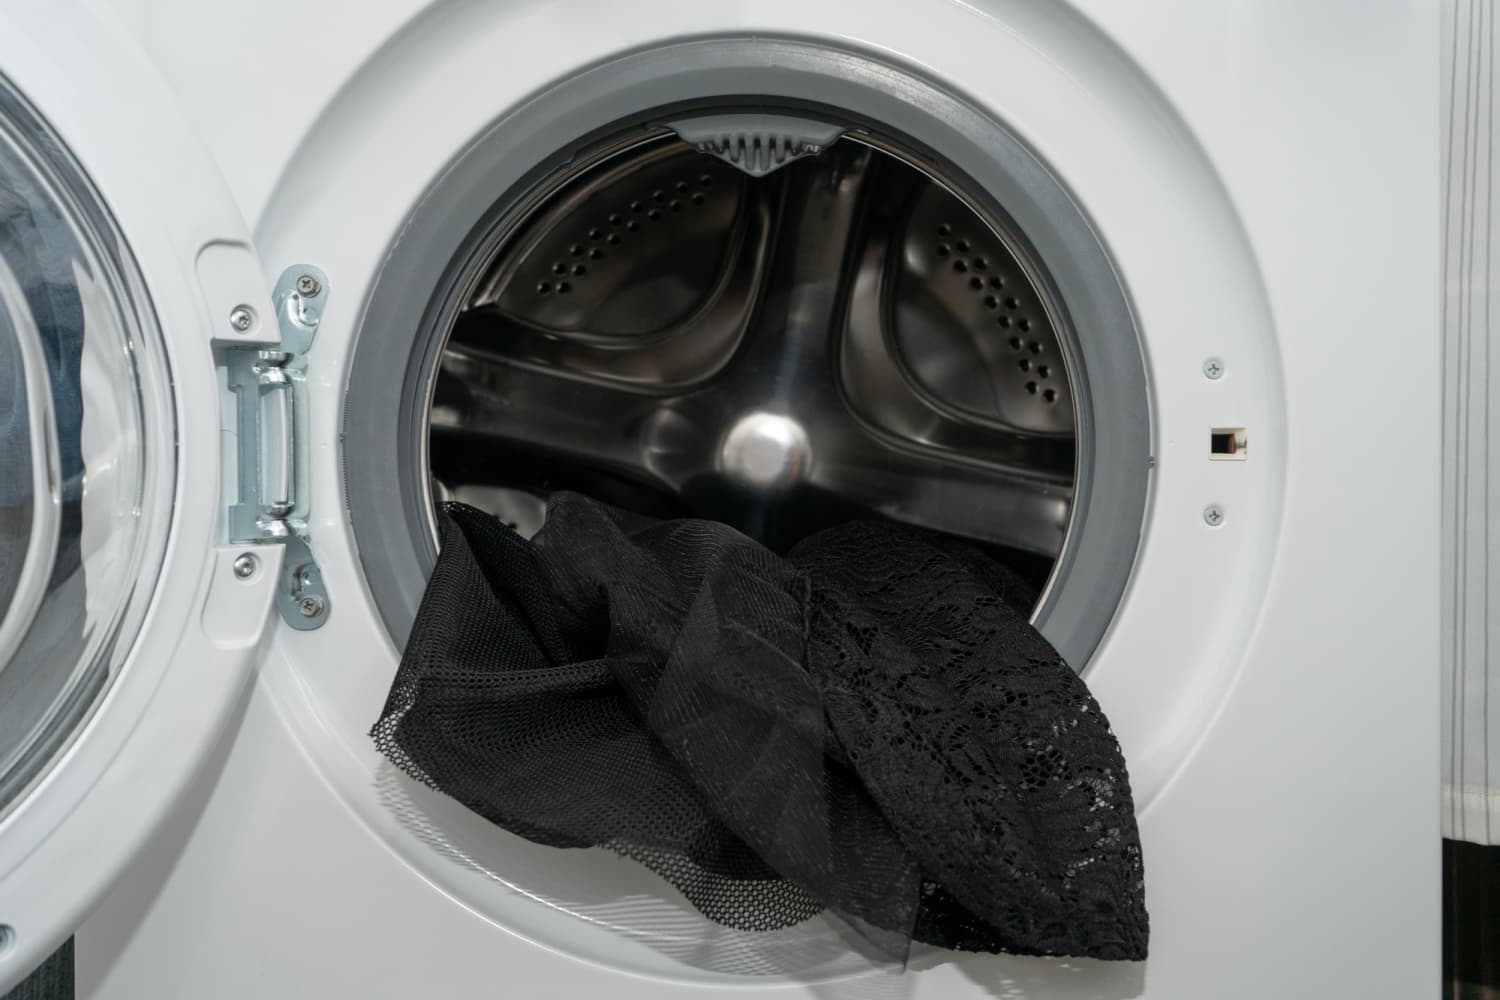 https://cdn.apartmenttherapy.info/image/upload/f_auto,q_auto:eco,c_fill,g_auto,w_1500,ar_3:2/dry-clean-machine-wash